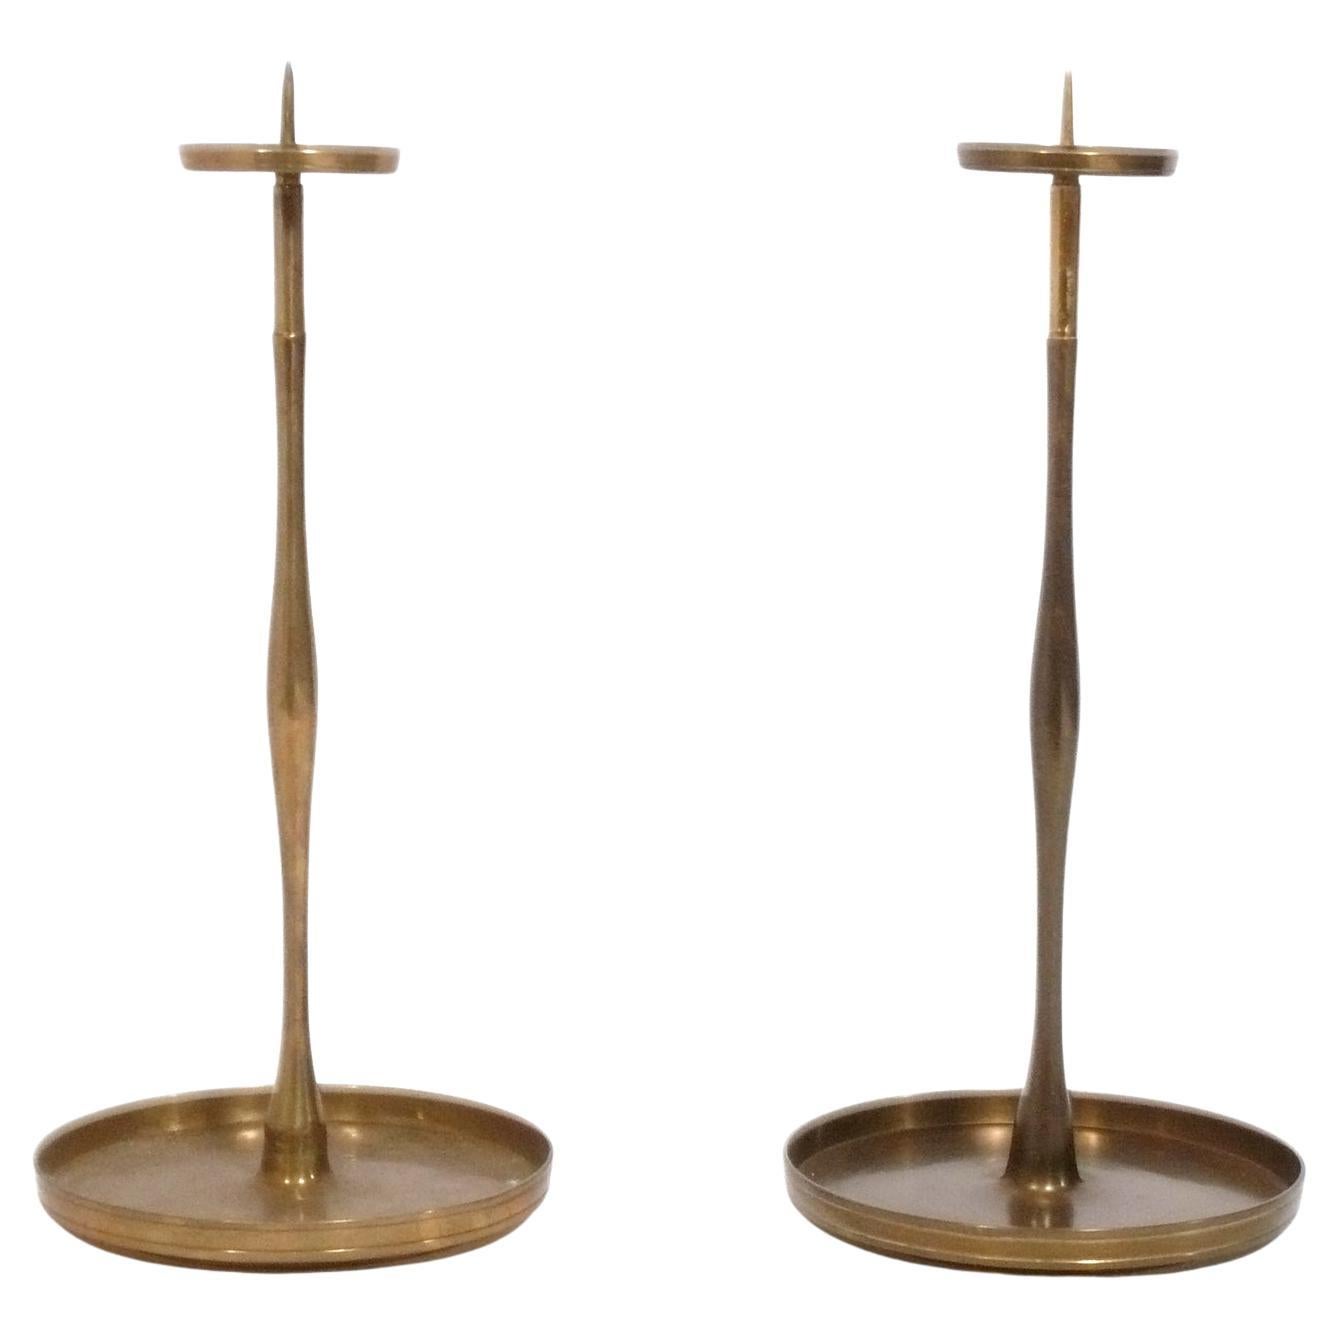 Nelson Rockefeller Collection Asian Inspired Brass Candlesticks